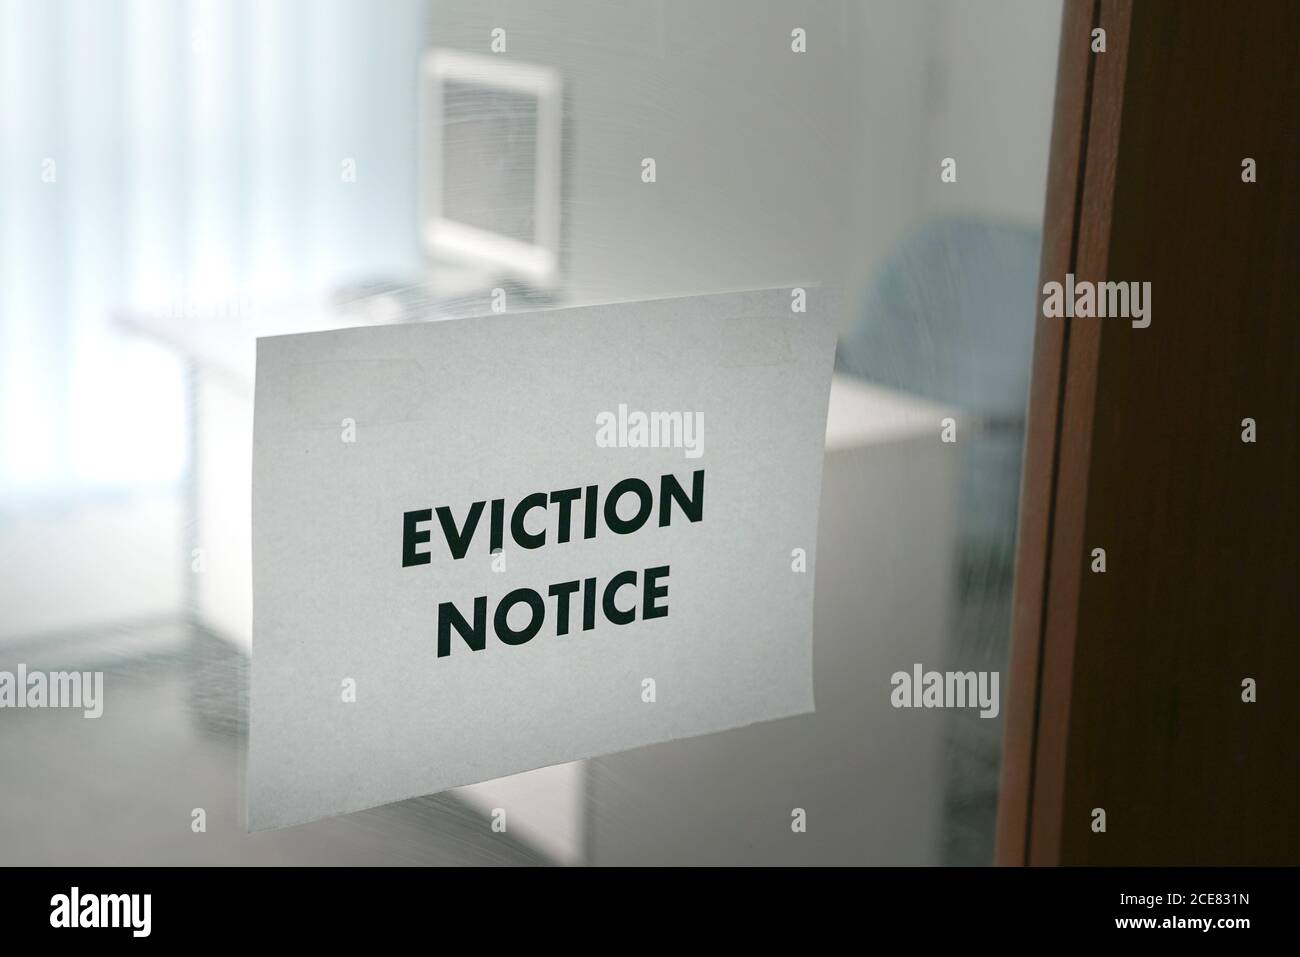 Eviction Notice on office glass door. Stock Photo